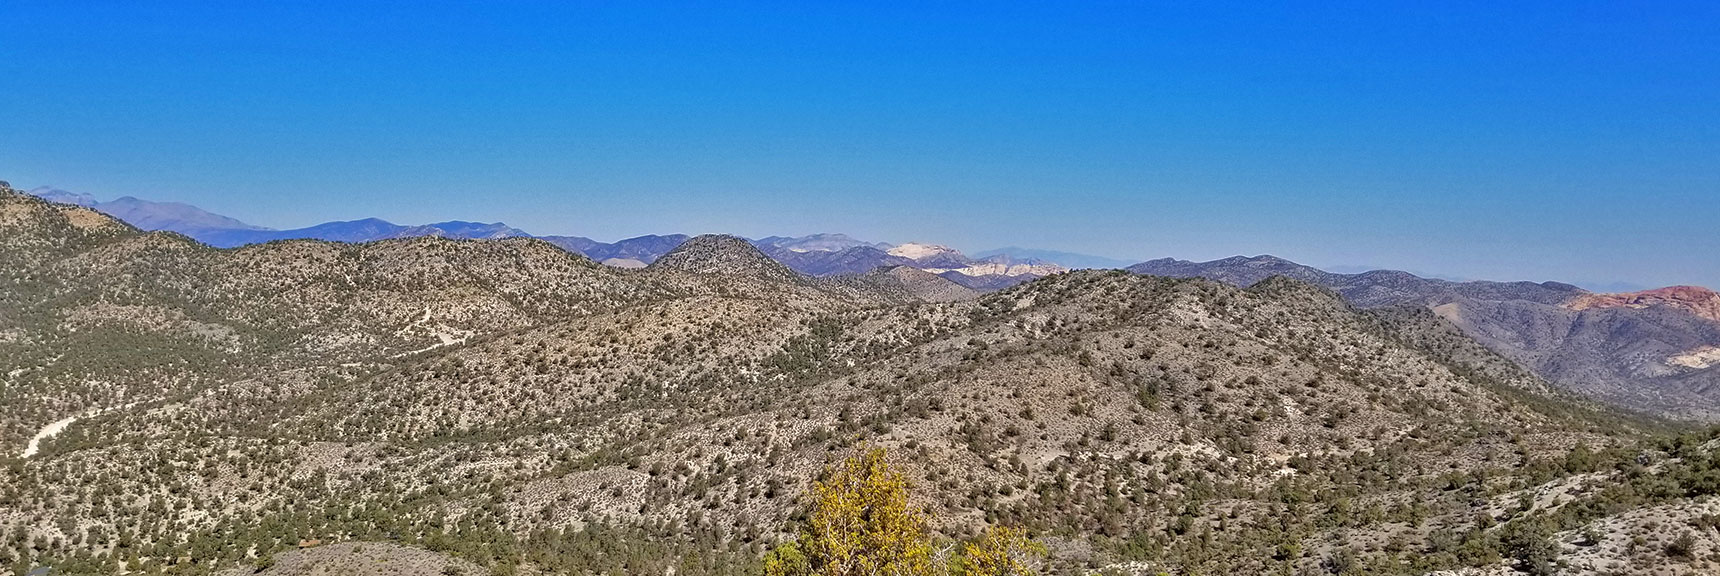 View from Summit Approach Ridge to Rainbow Mountains Wilderness Area | Potosi Mountain Northwestern Approach, Spring Mountains, Nevada